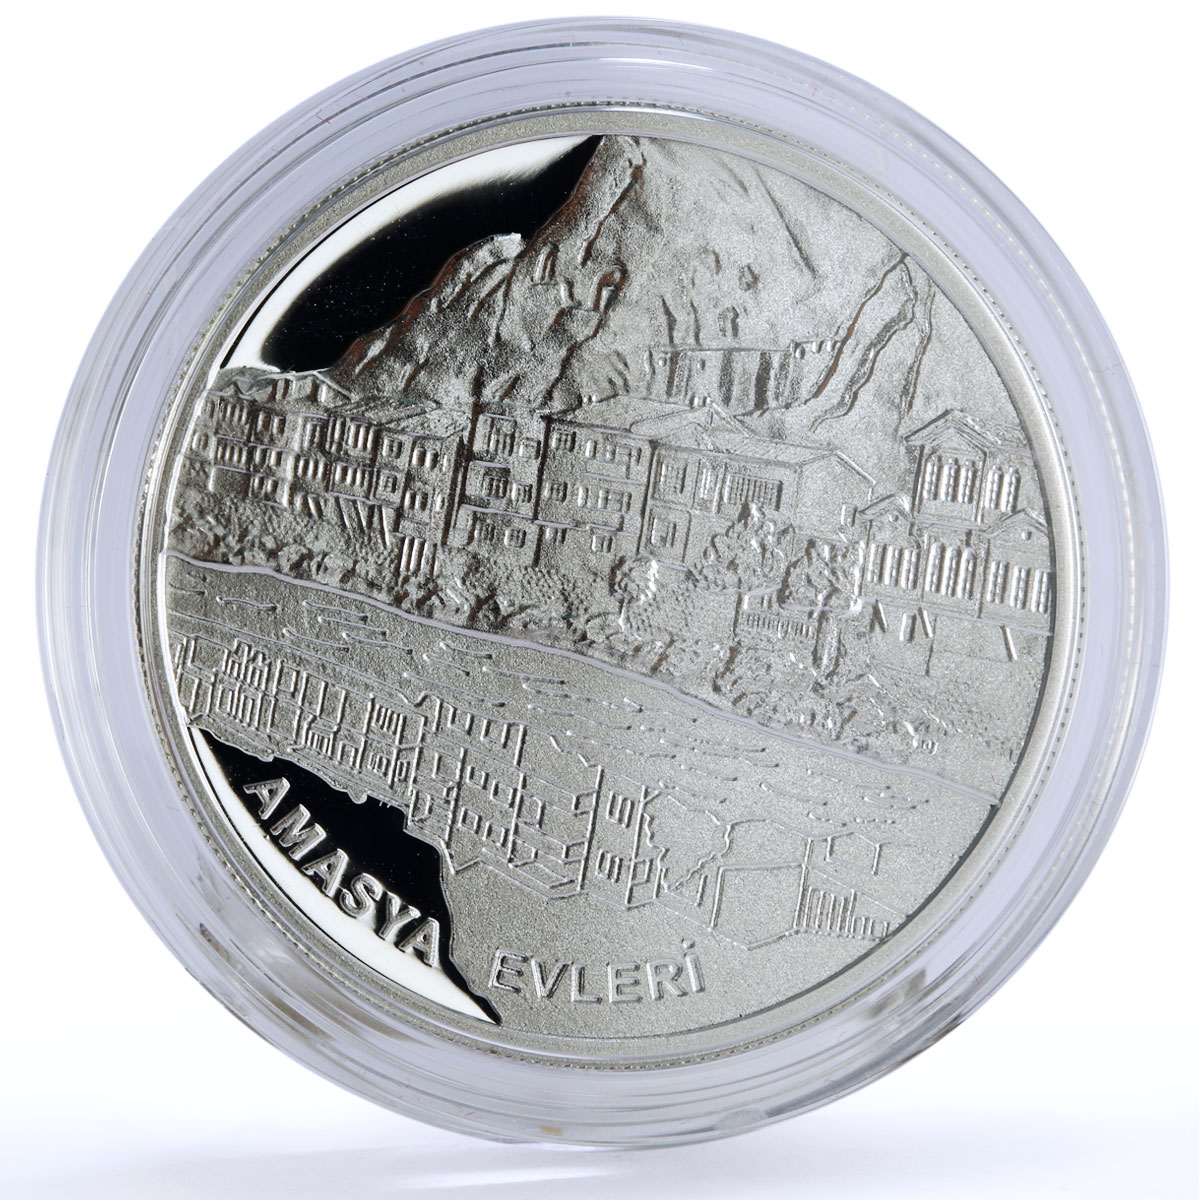 Turkey 20 lira Amasya Evleri City Architecture Landscape proof silver coin 2010